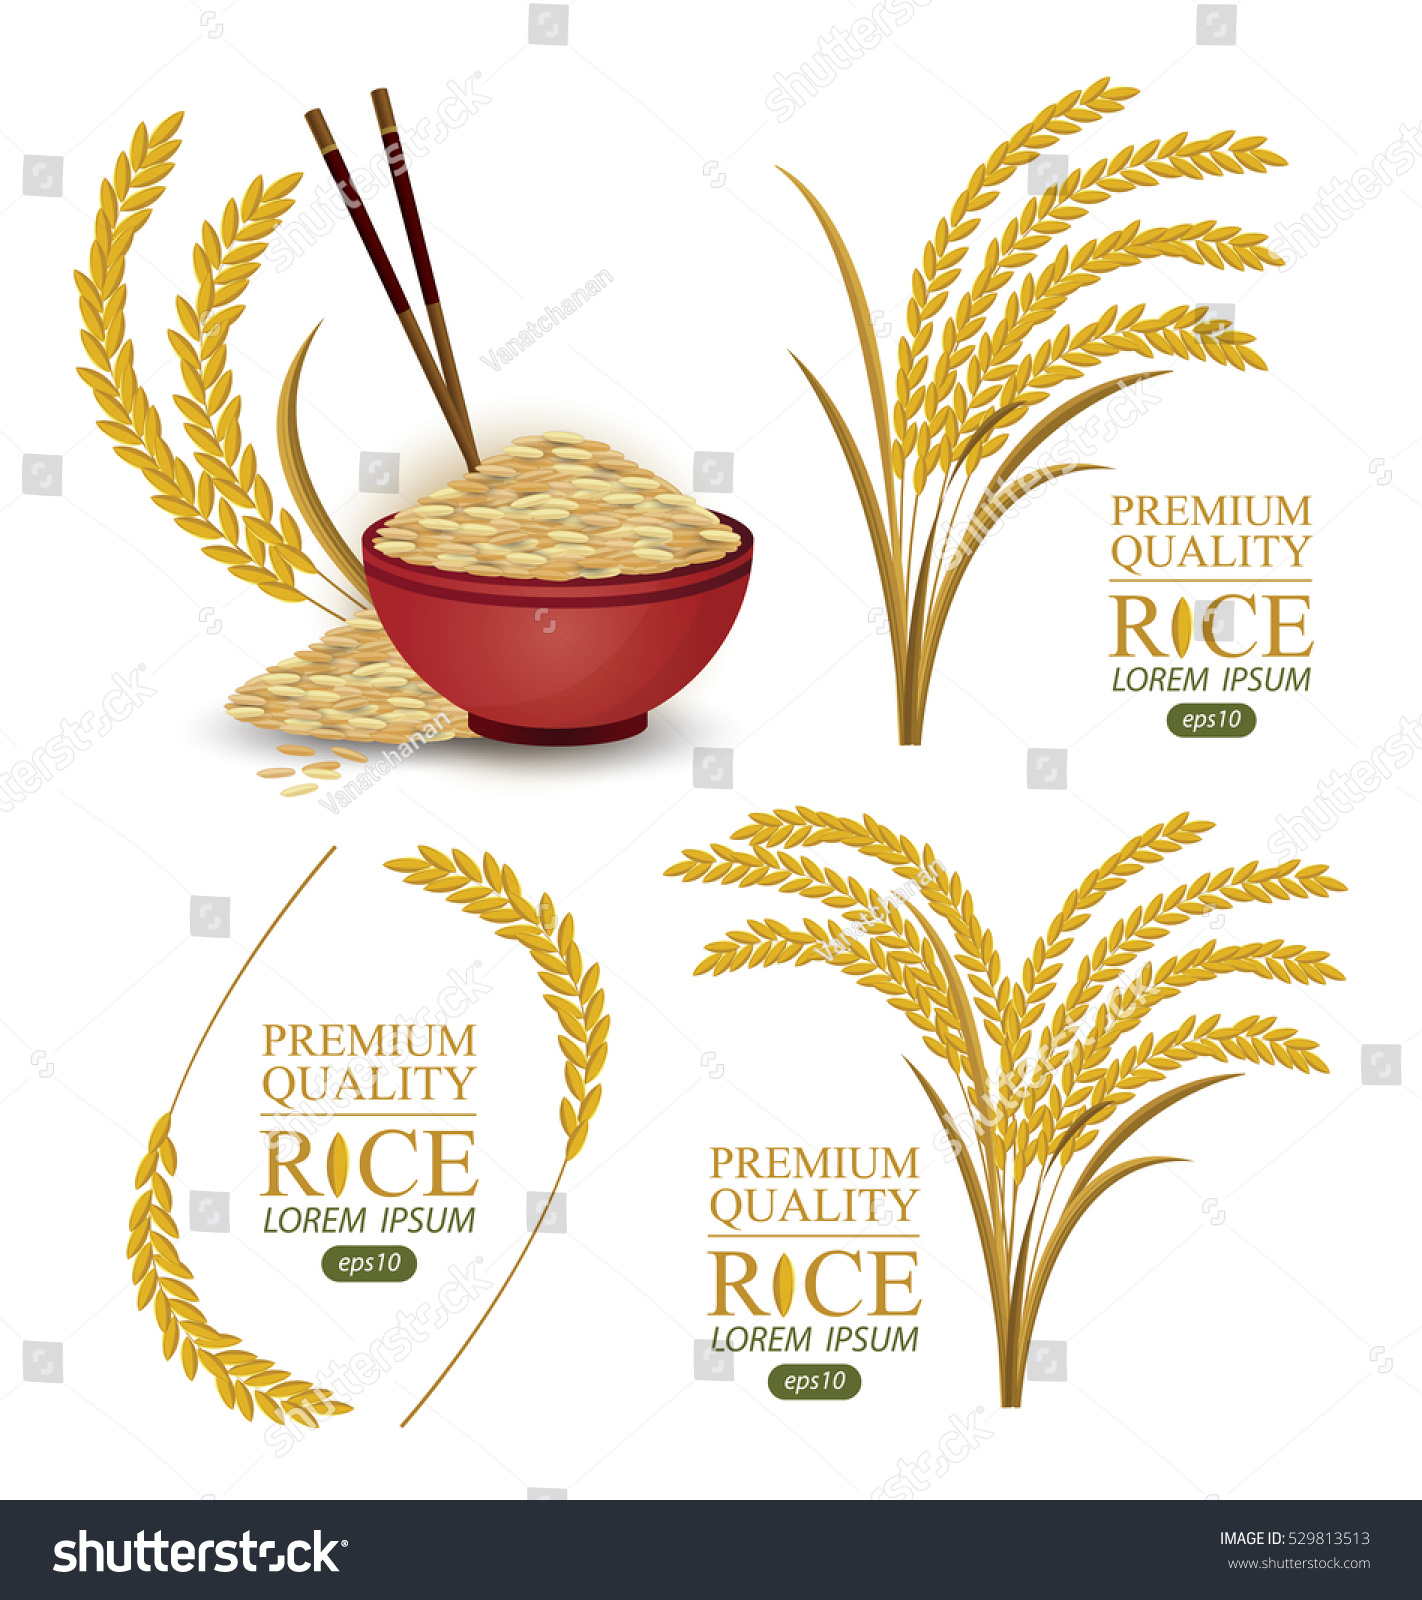 Rice. Vector Illustration. - 529813513 : Shutterstock